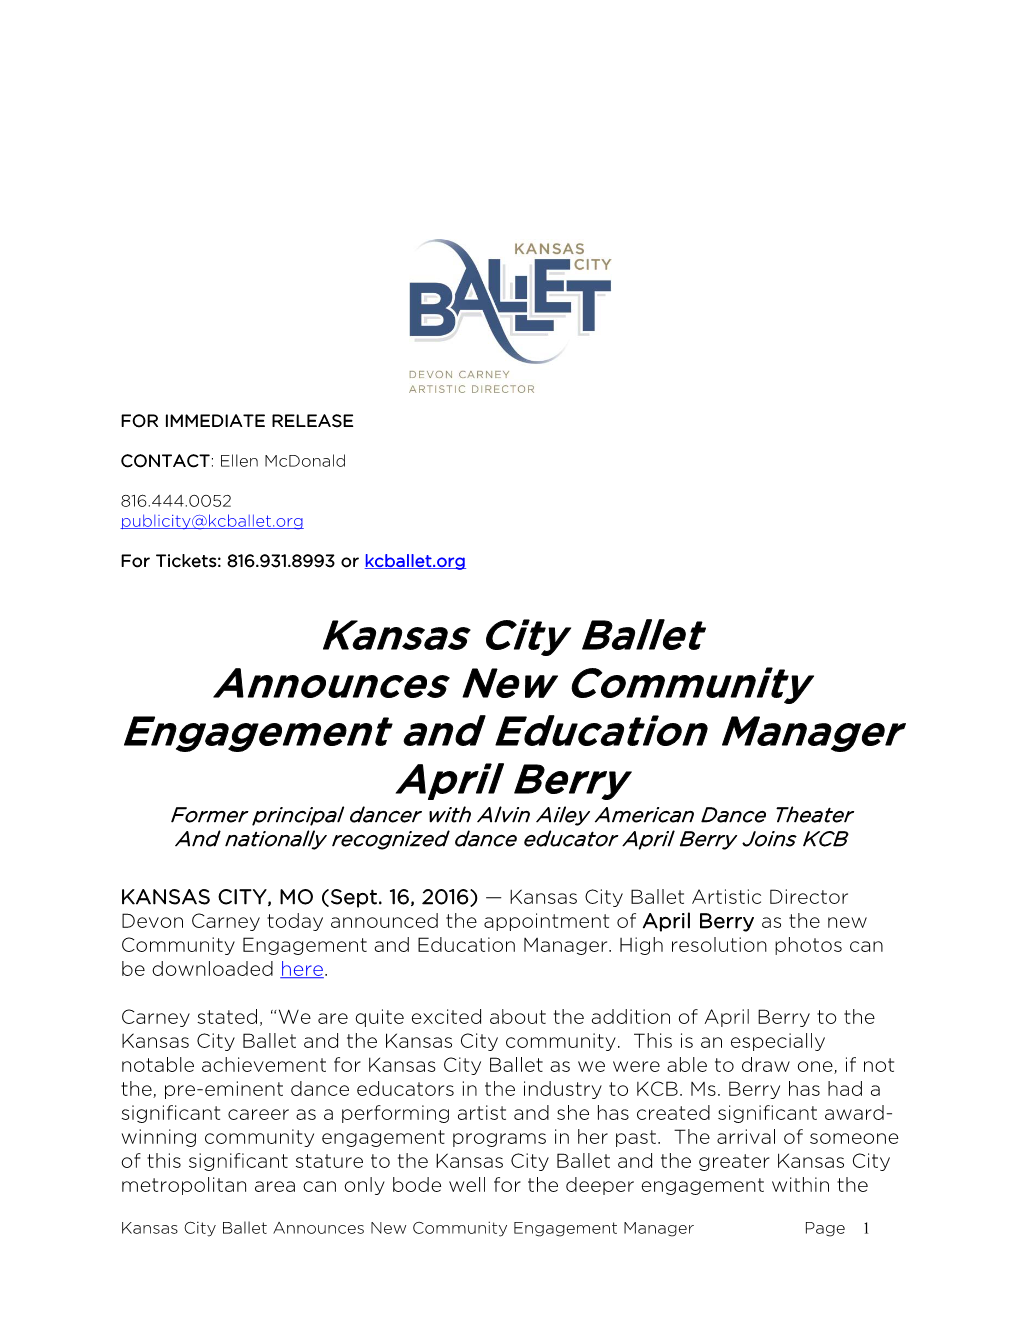 Kansas City Ballet Announces New Community Engagement and Education Manager April Berry